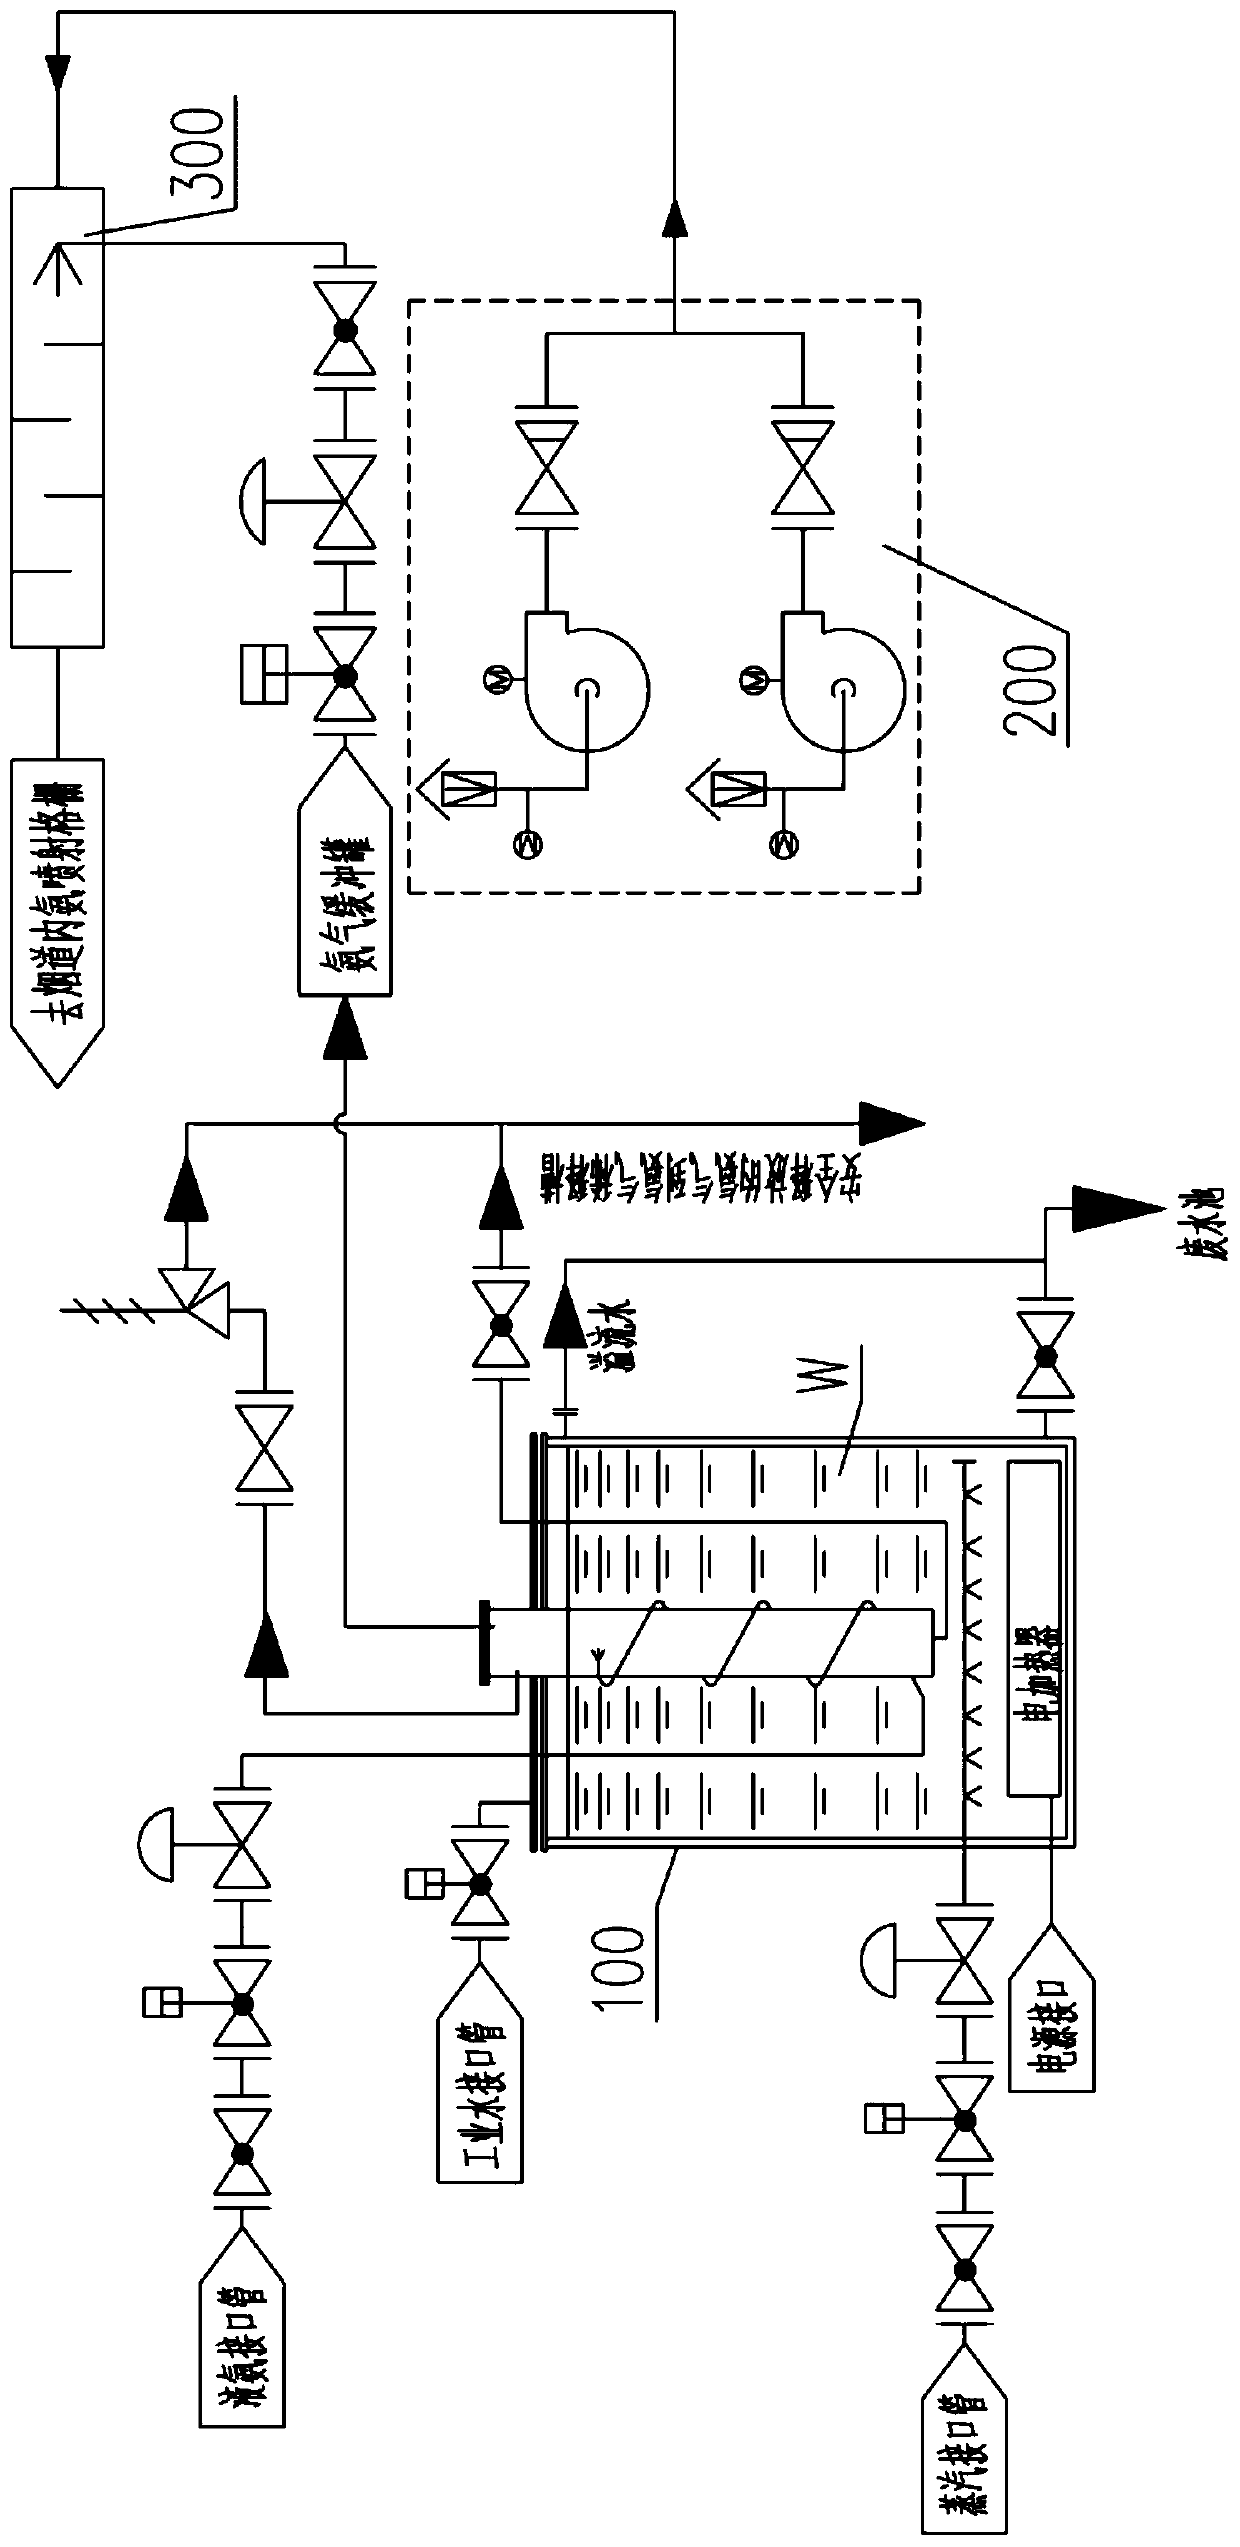 A denitrification ammonia gas pretreatment system